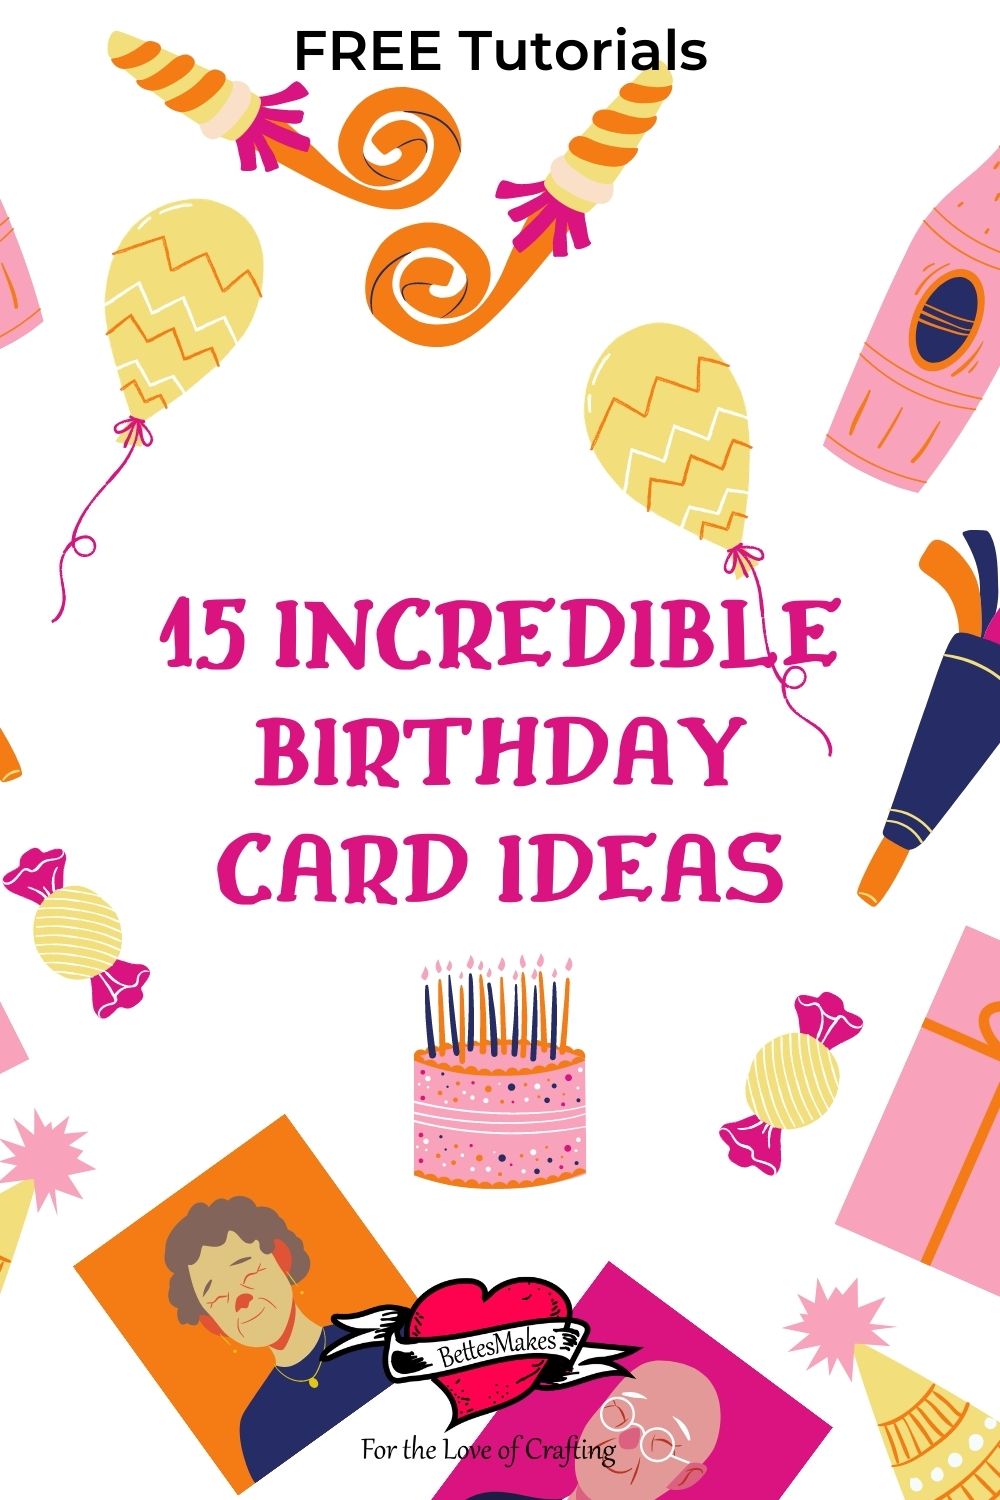 15 Incredible Birthday Card Ideas